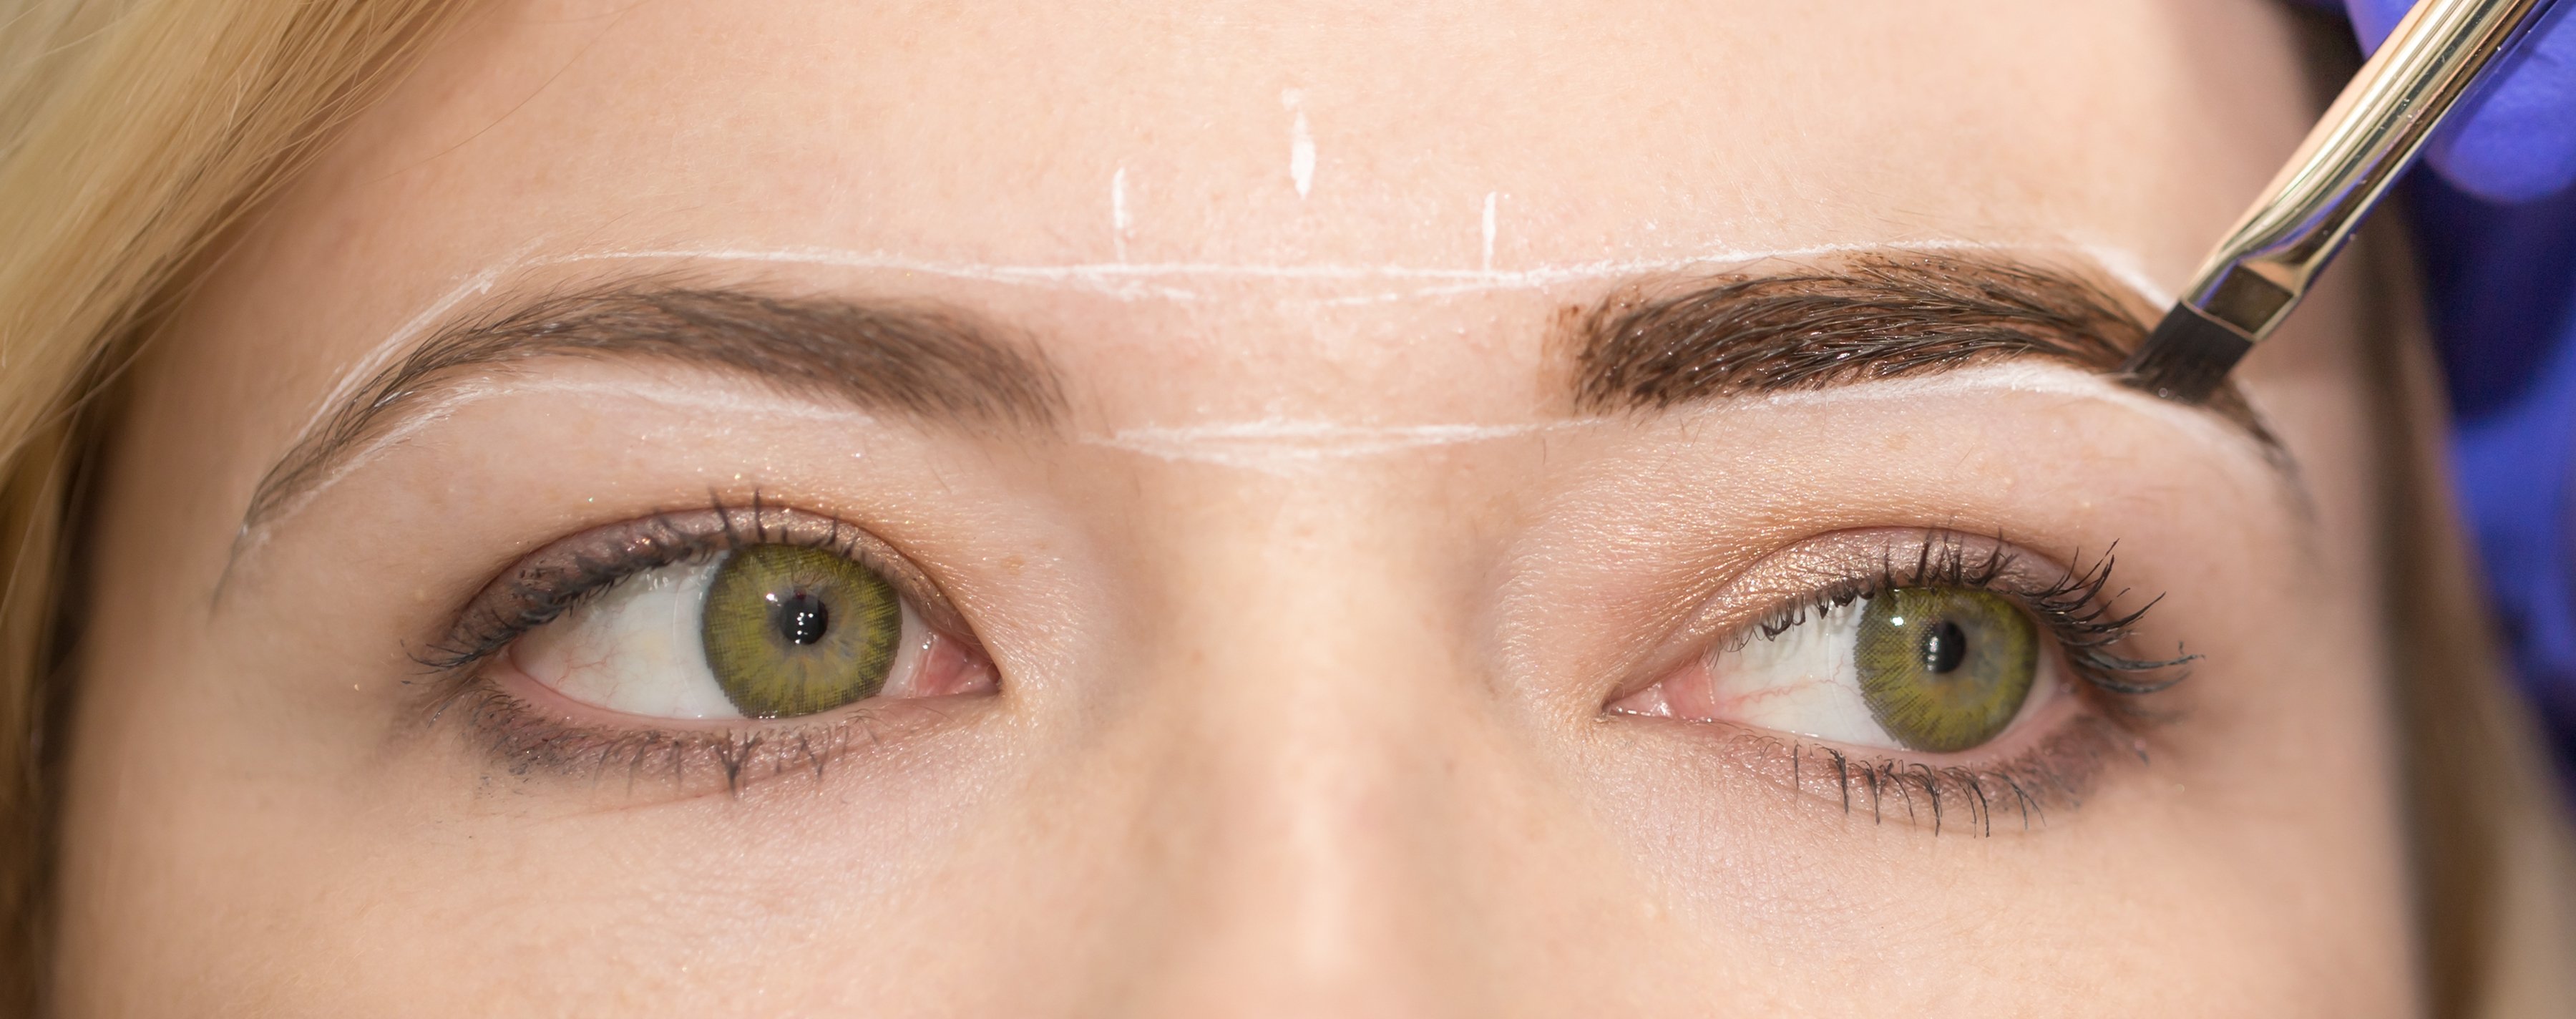 Mujer maquillándose las cejas. | Foto: Shutterstock